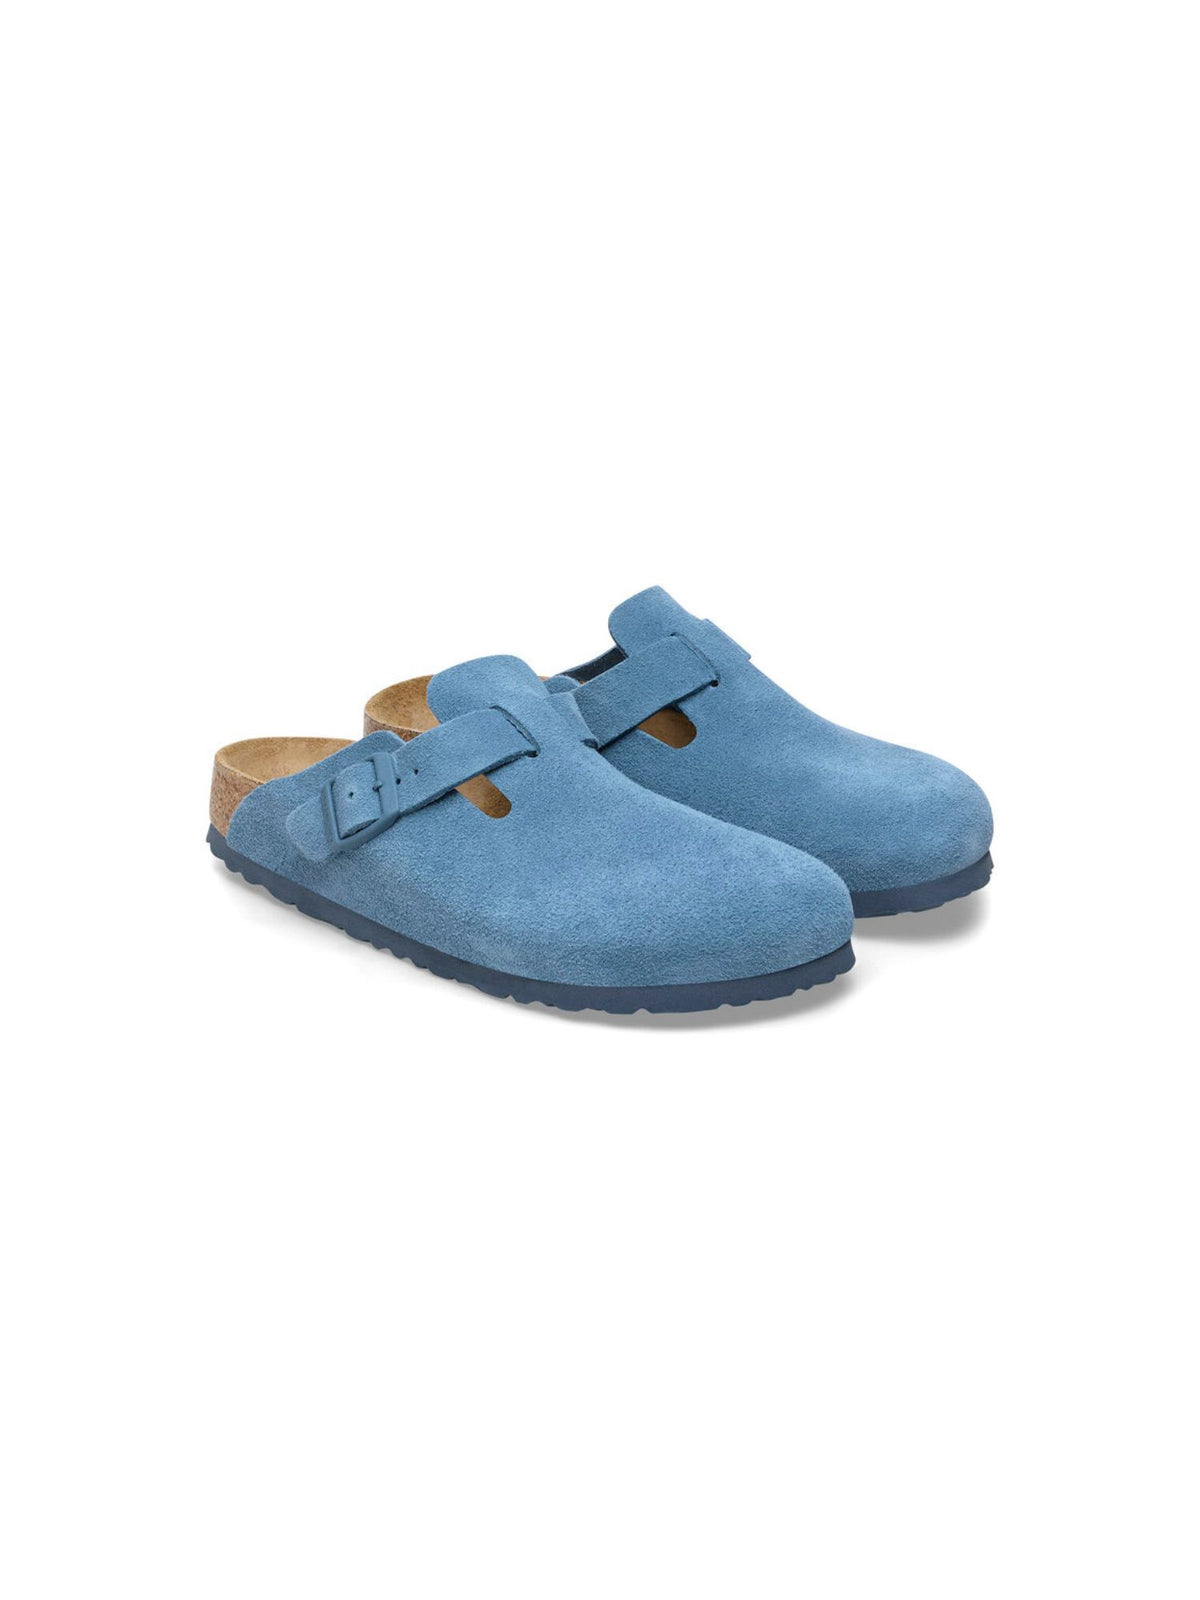 birkenstock boston soft footbed suede clog in elemental blue-pair